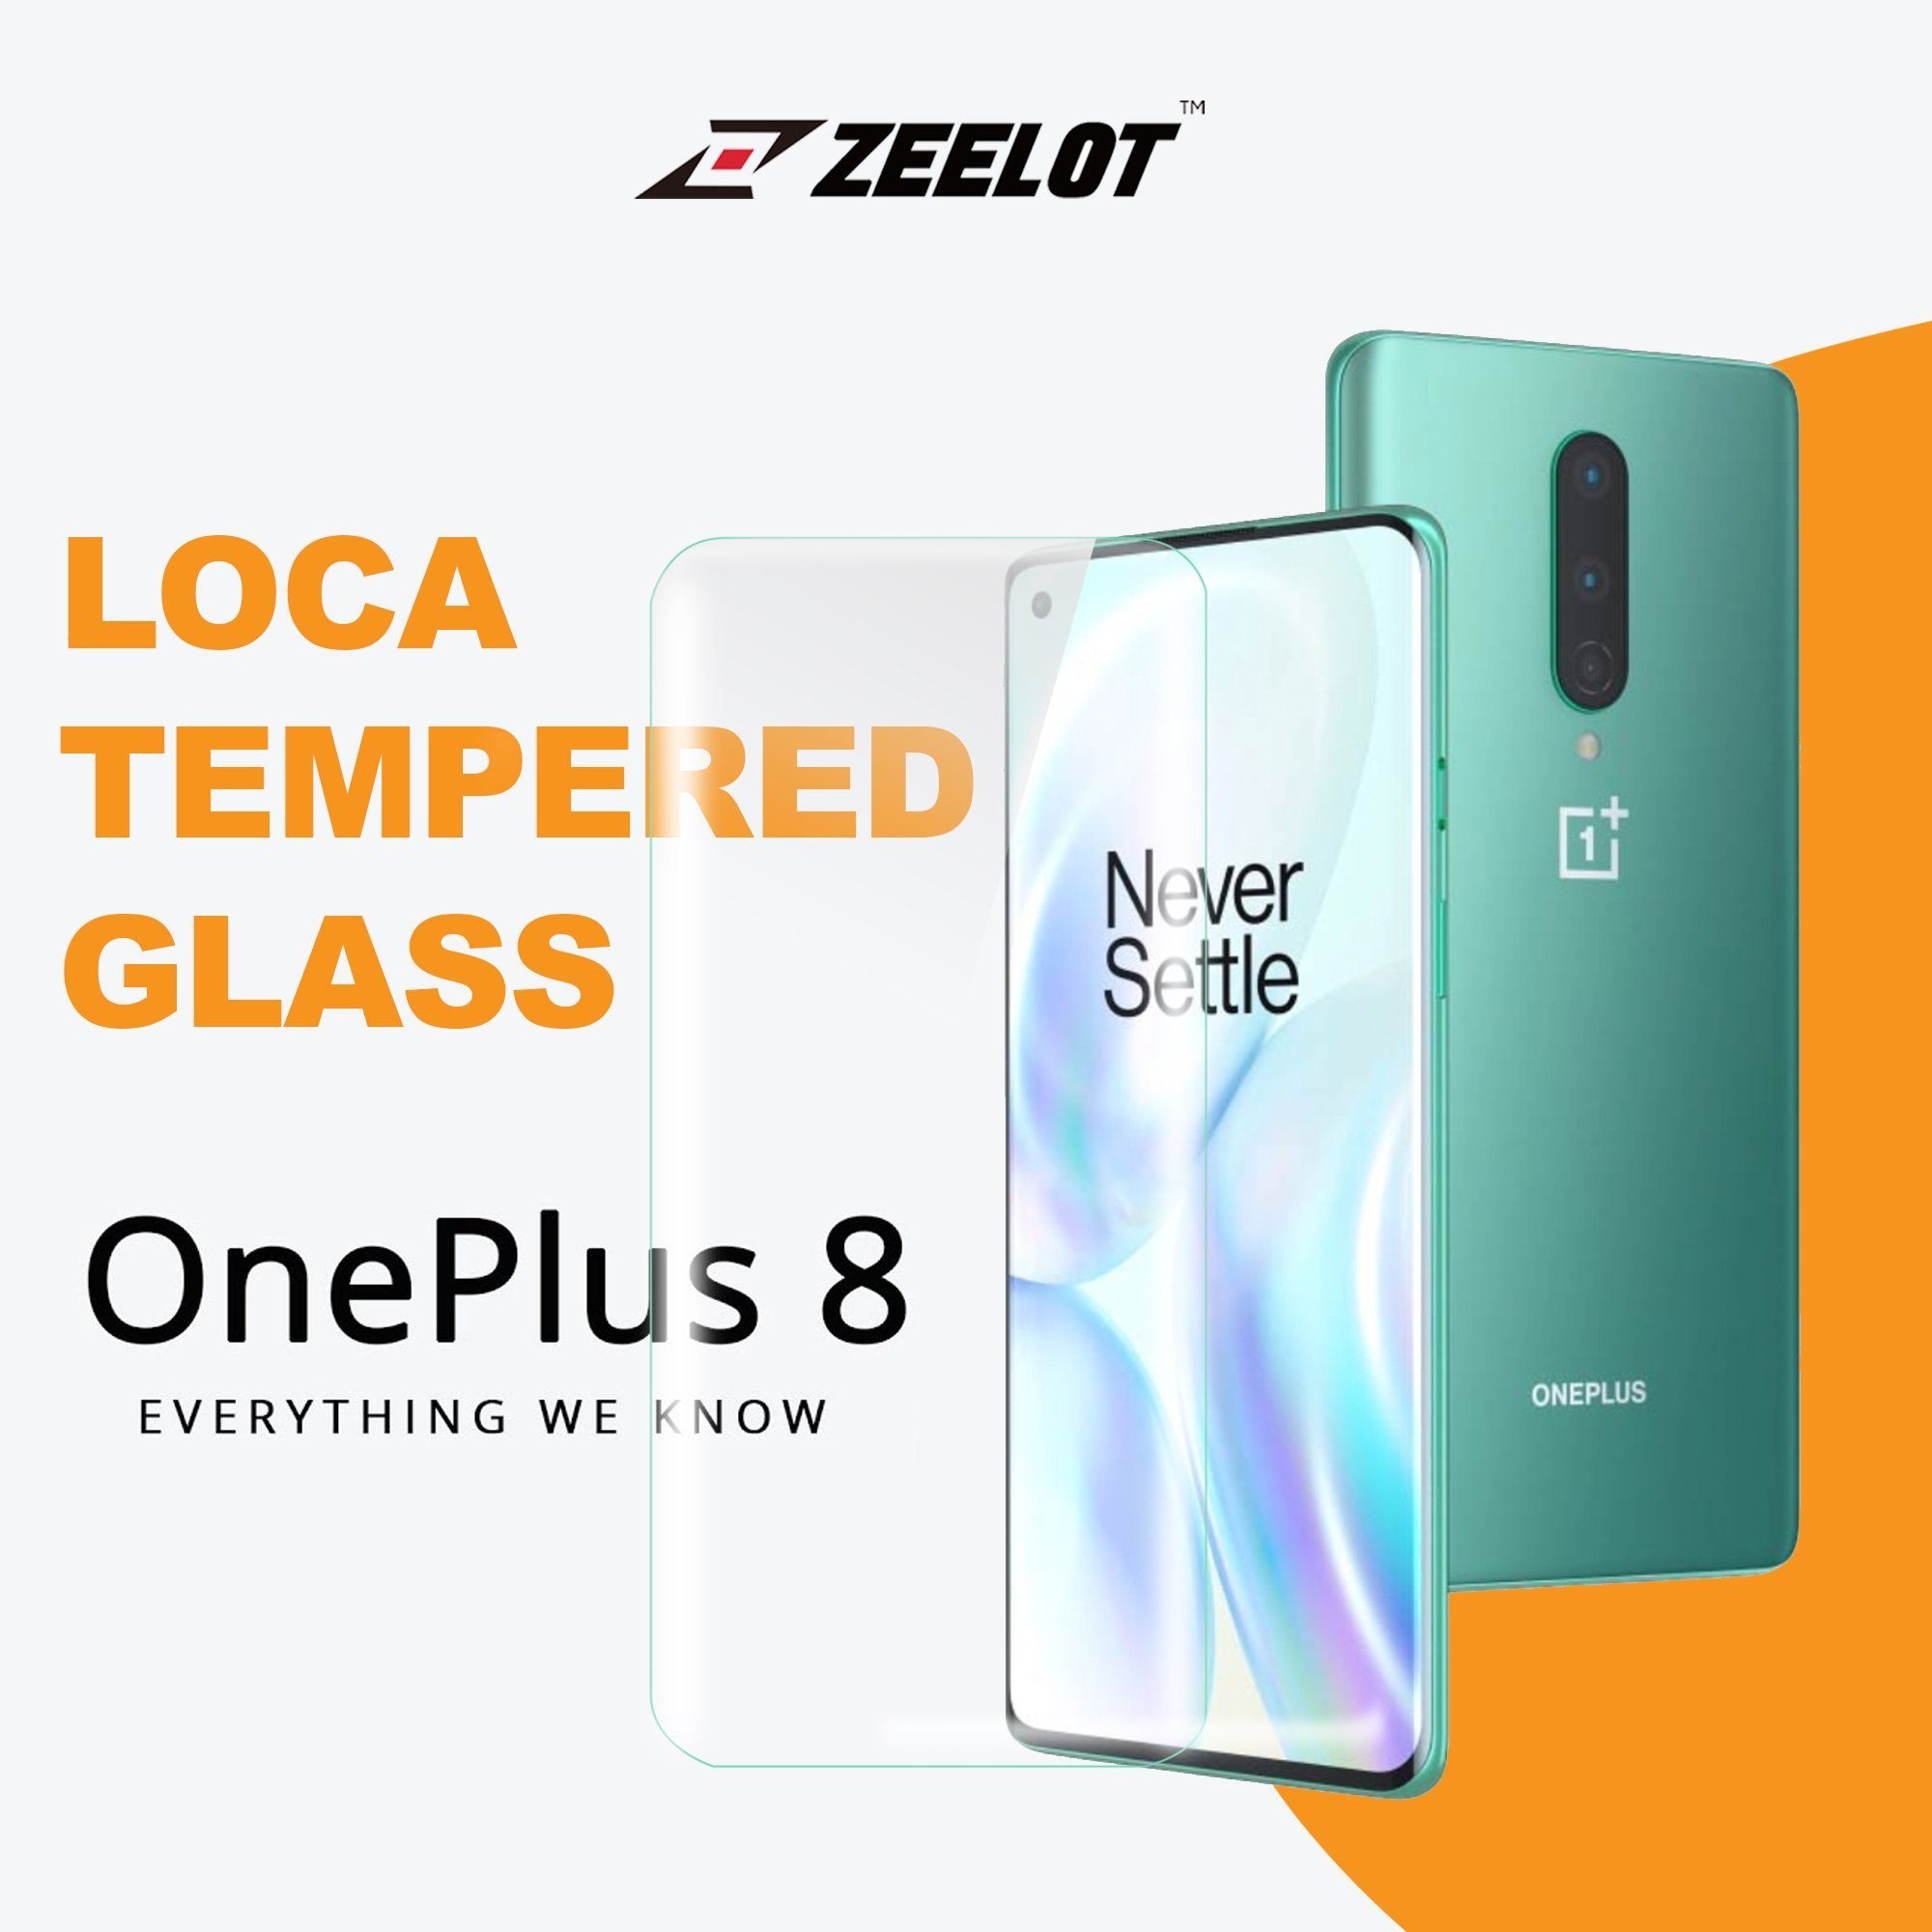 ZEELOT PureGlass 3D LOCA Tempered Glass Screen Protector for OnePlus 8, Clear OnePlus 8 Loca ZEELOT 